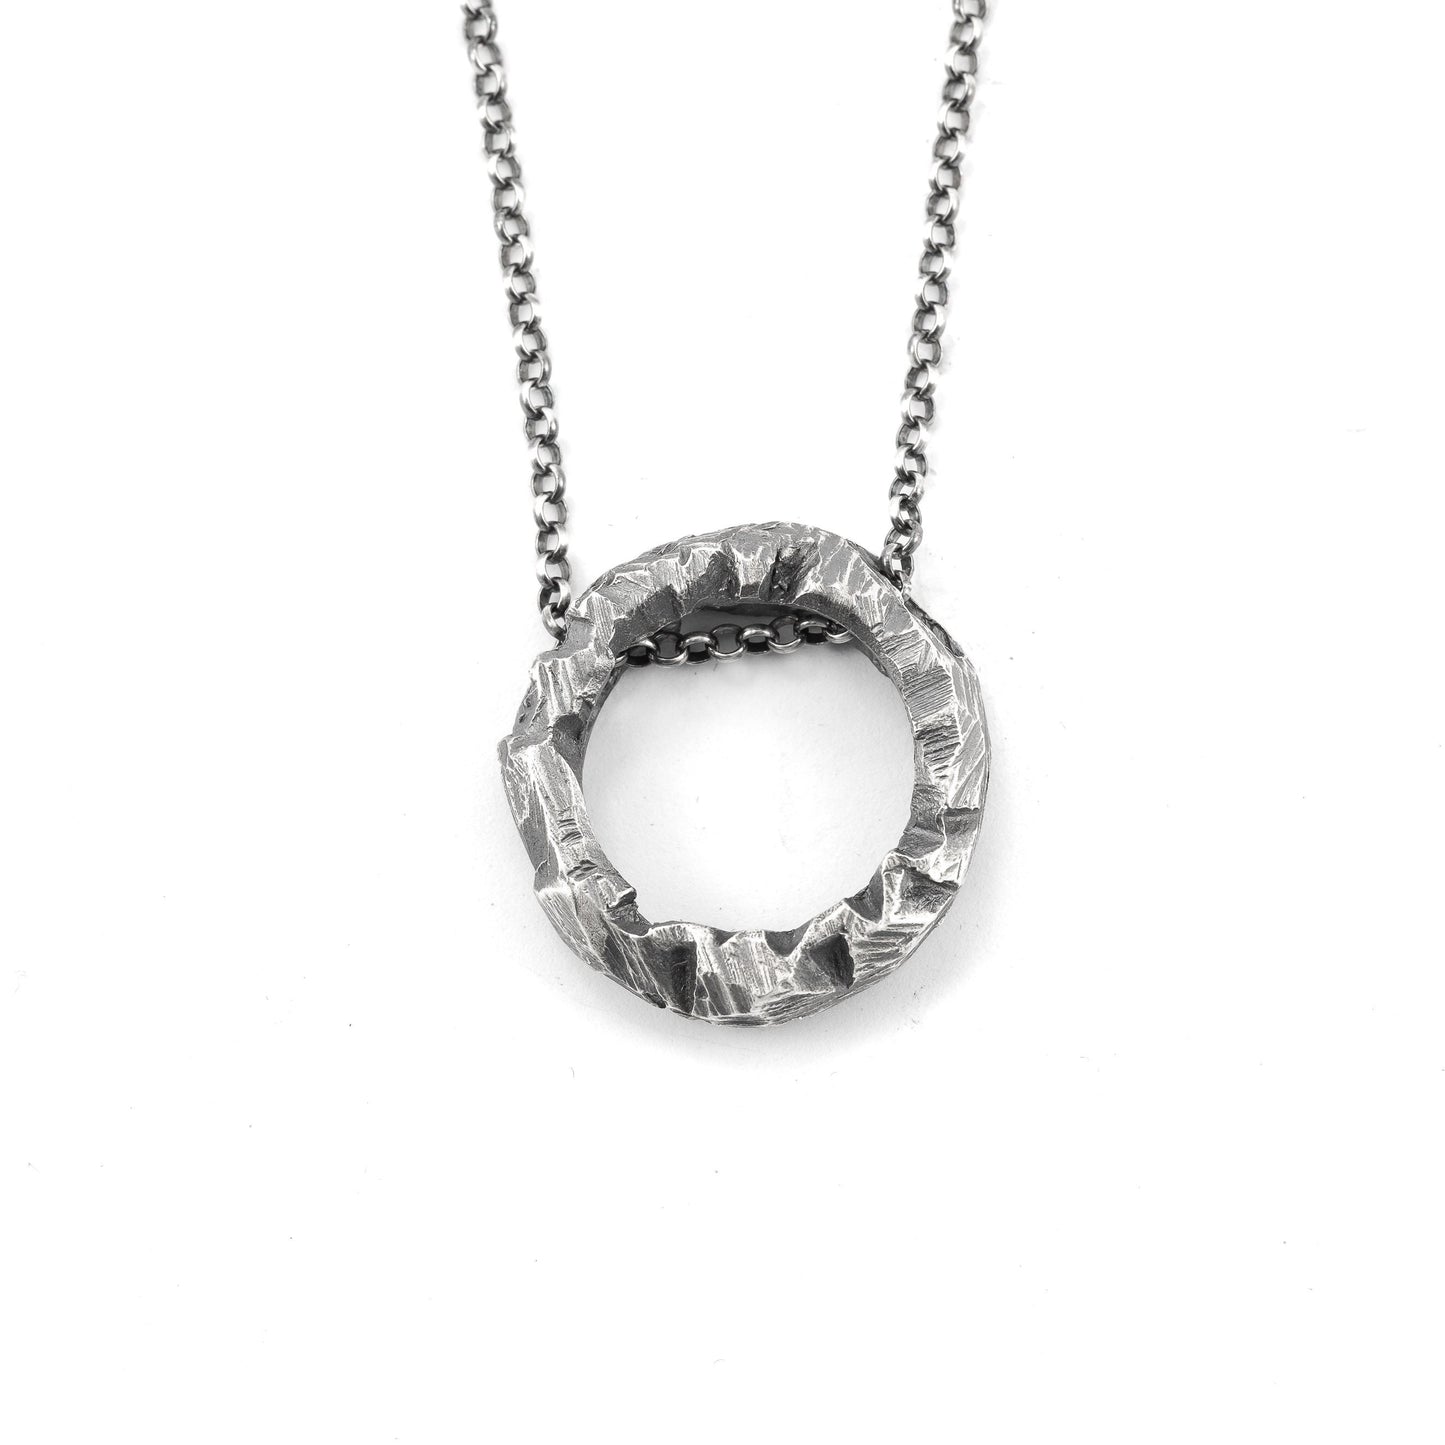 Mens Brutalist Rustic circle silver pendant necklace, Silver necklace, Handmade Silver jewelry, Unique Gift for men